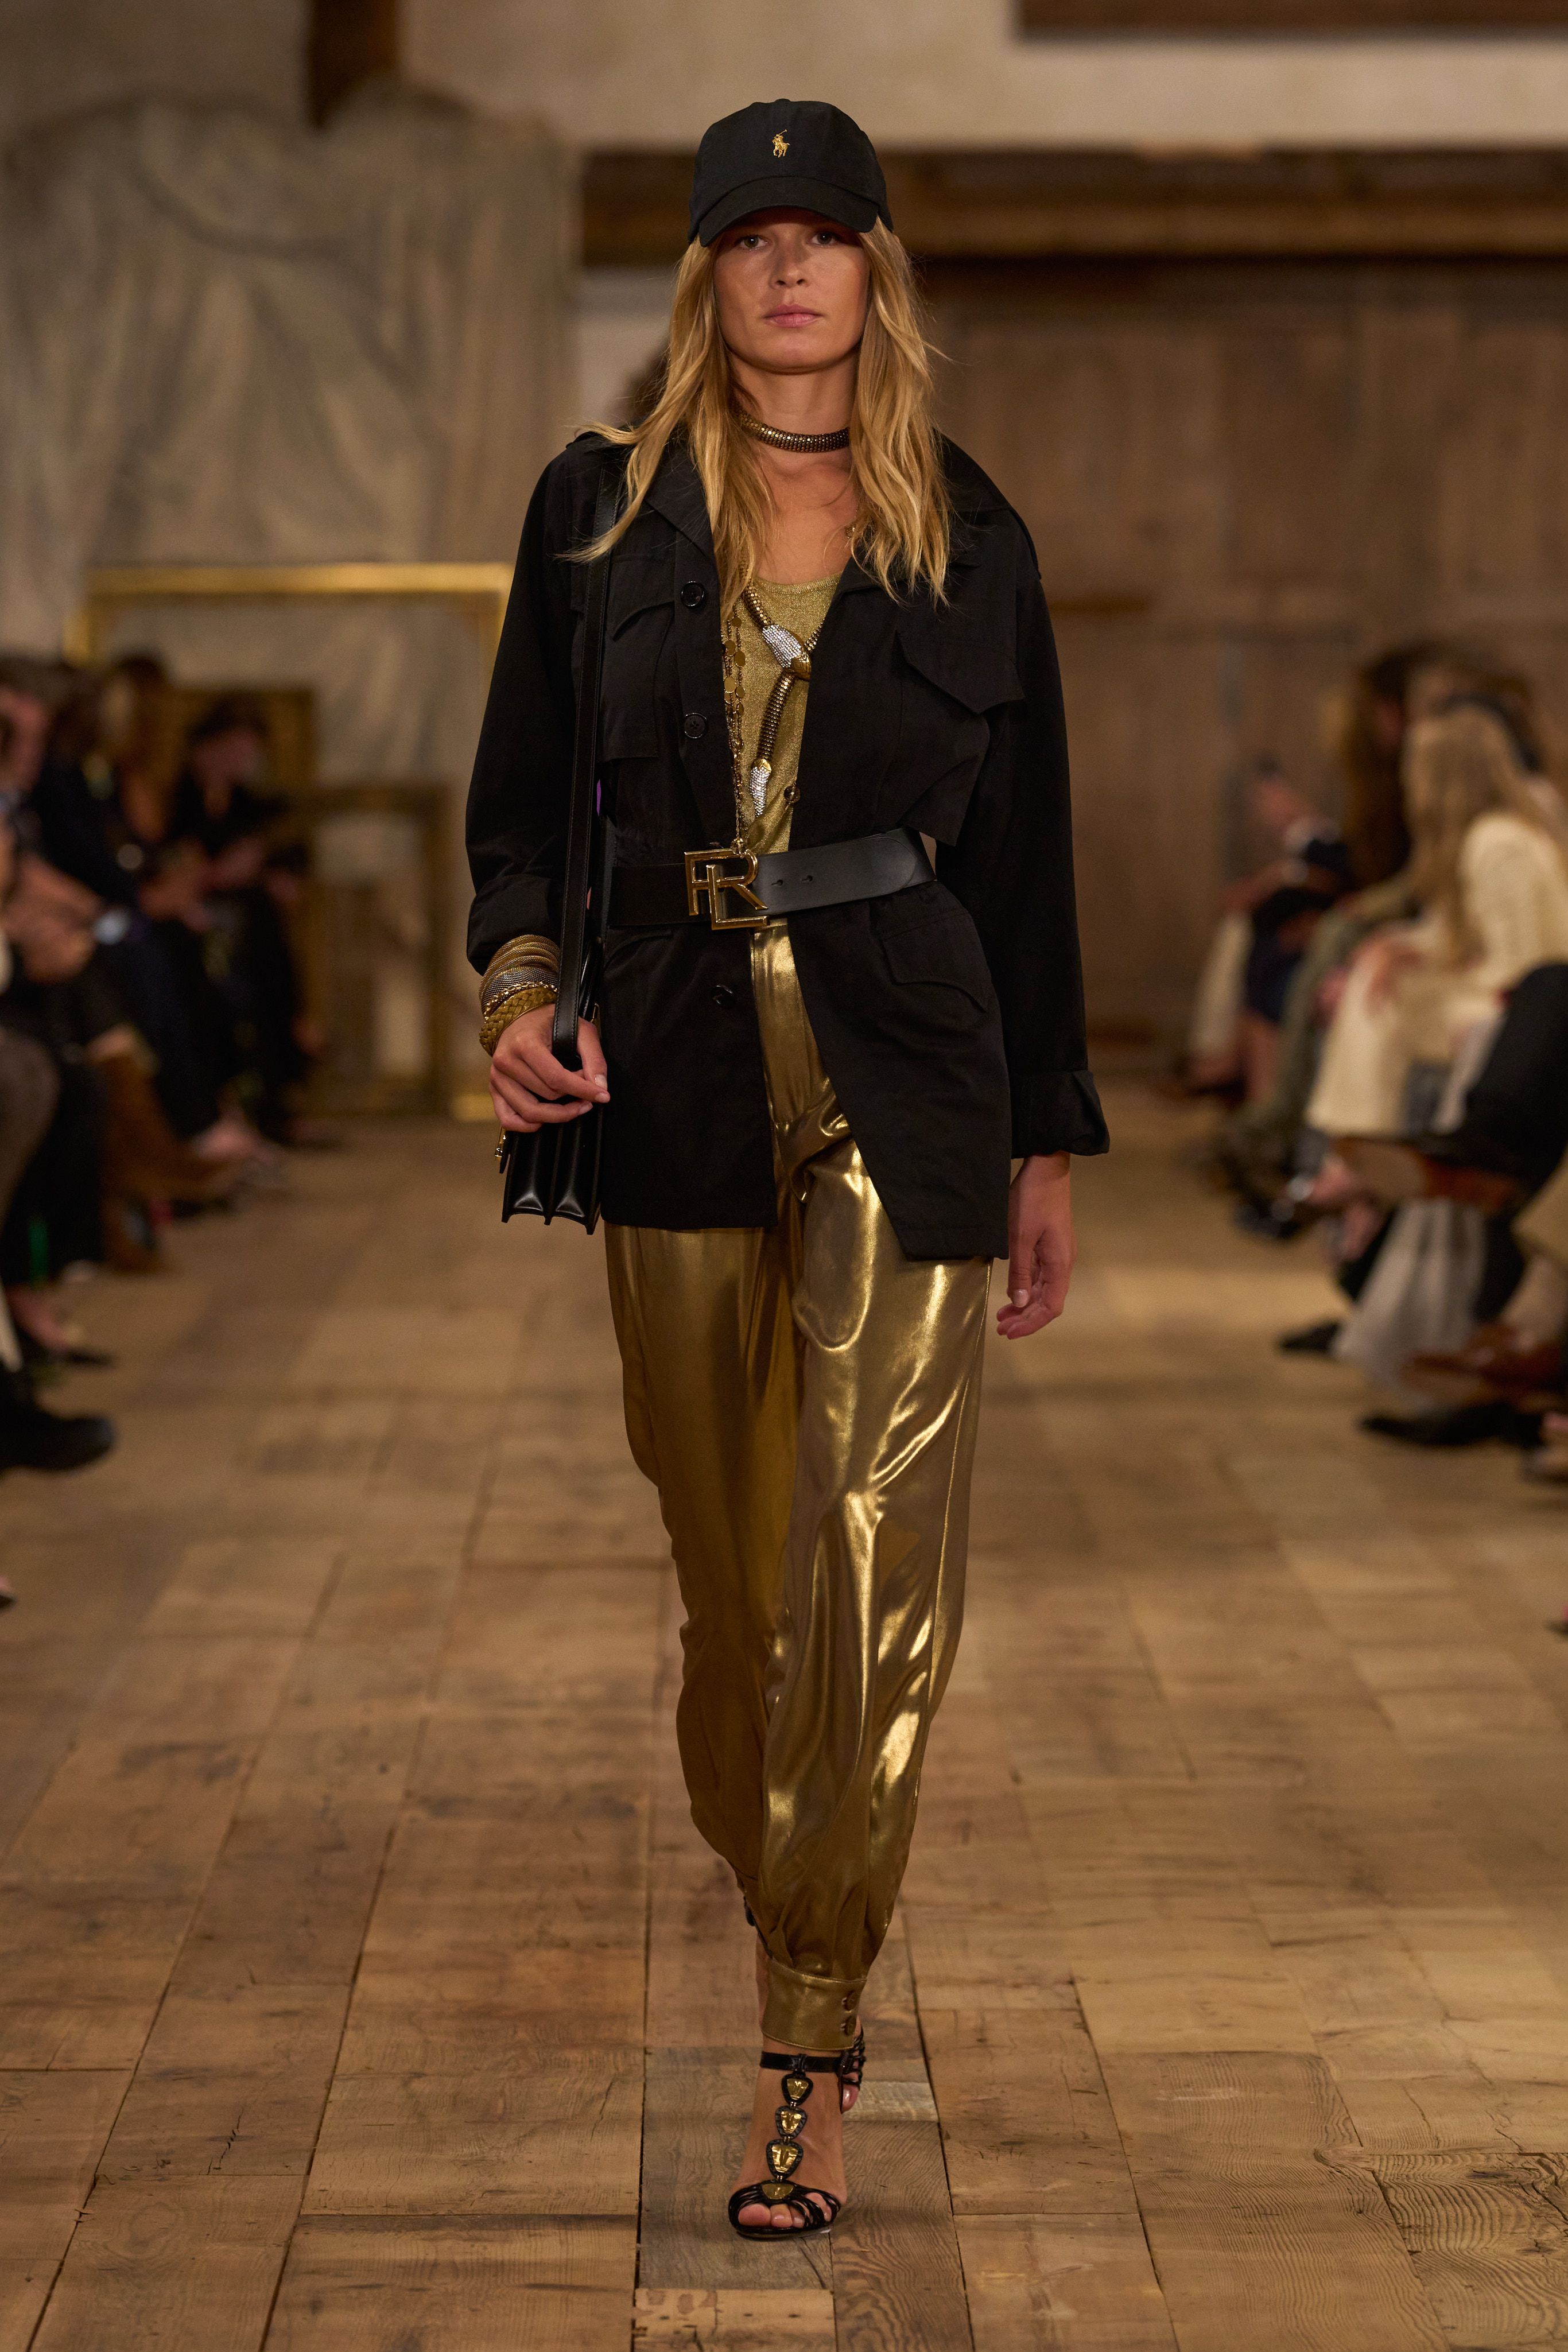 Ralph Lauren returns to New York Fashion Week, Peter Do to make